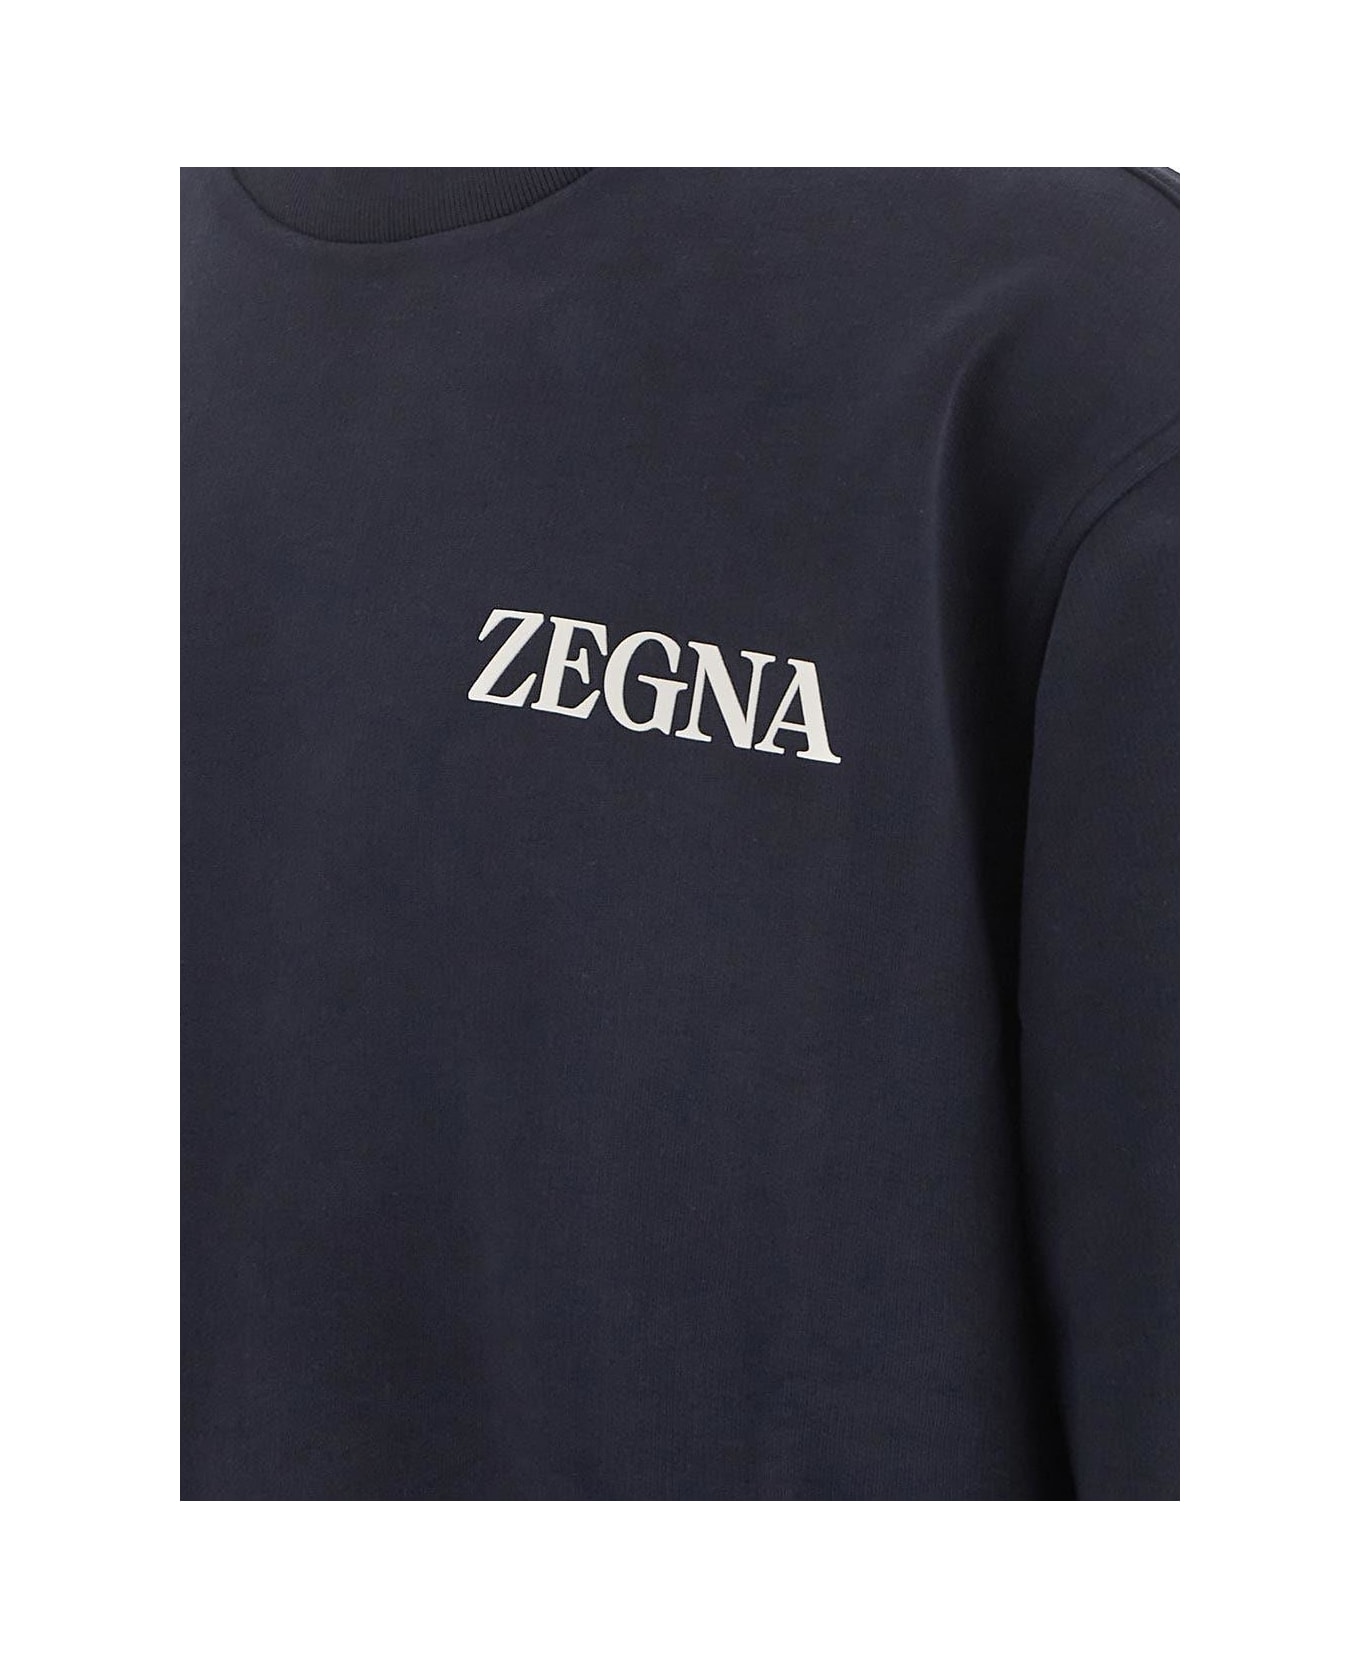 Zegna Navy Blue Sweatshirt - Blue navy